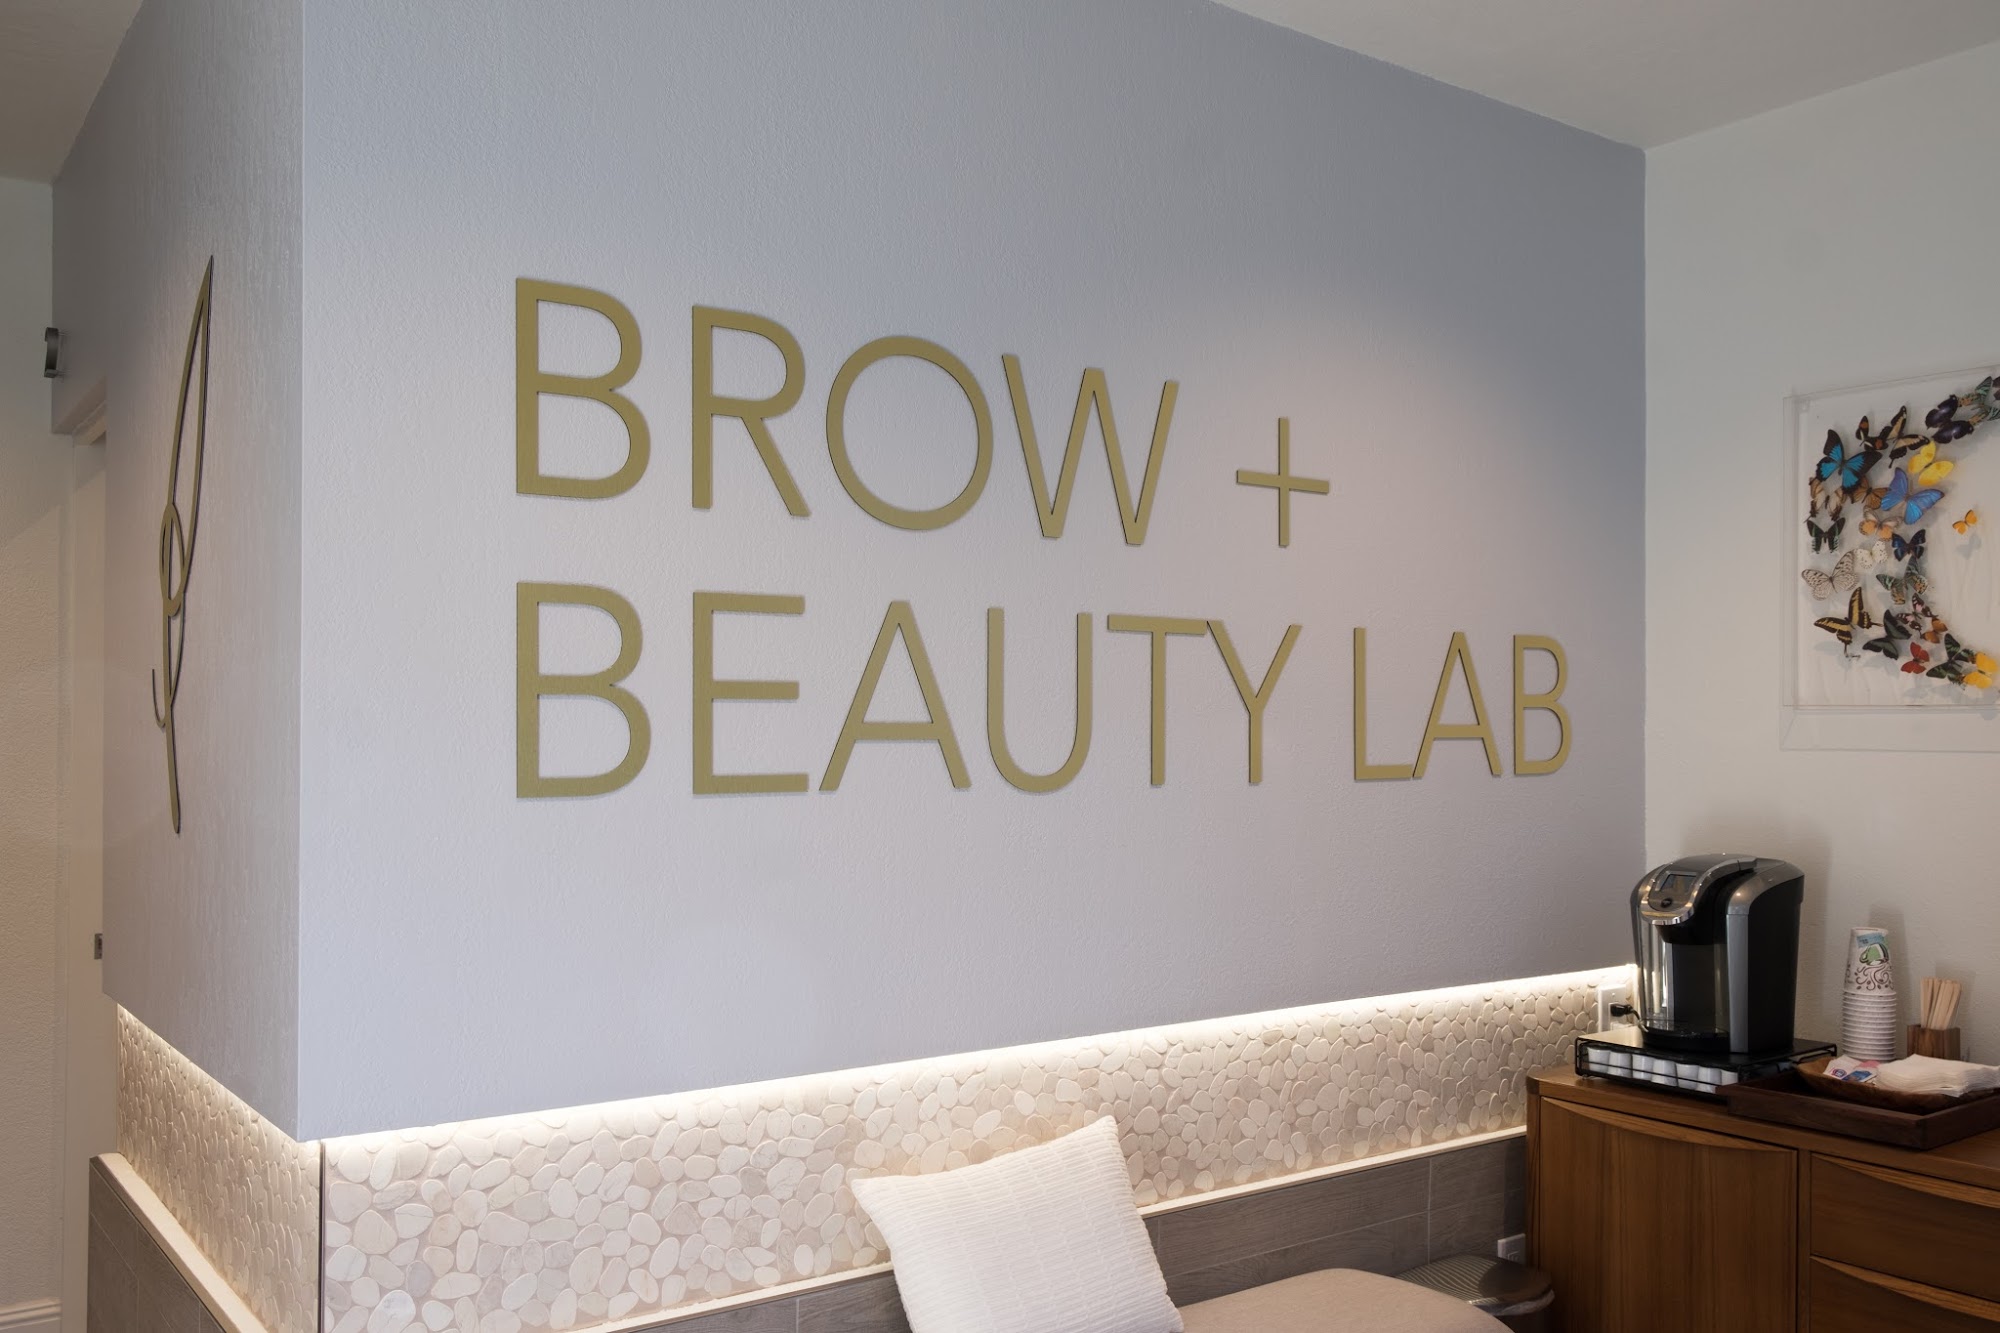 Brow + Beauty Lab